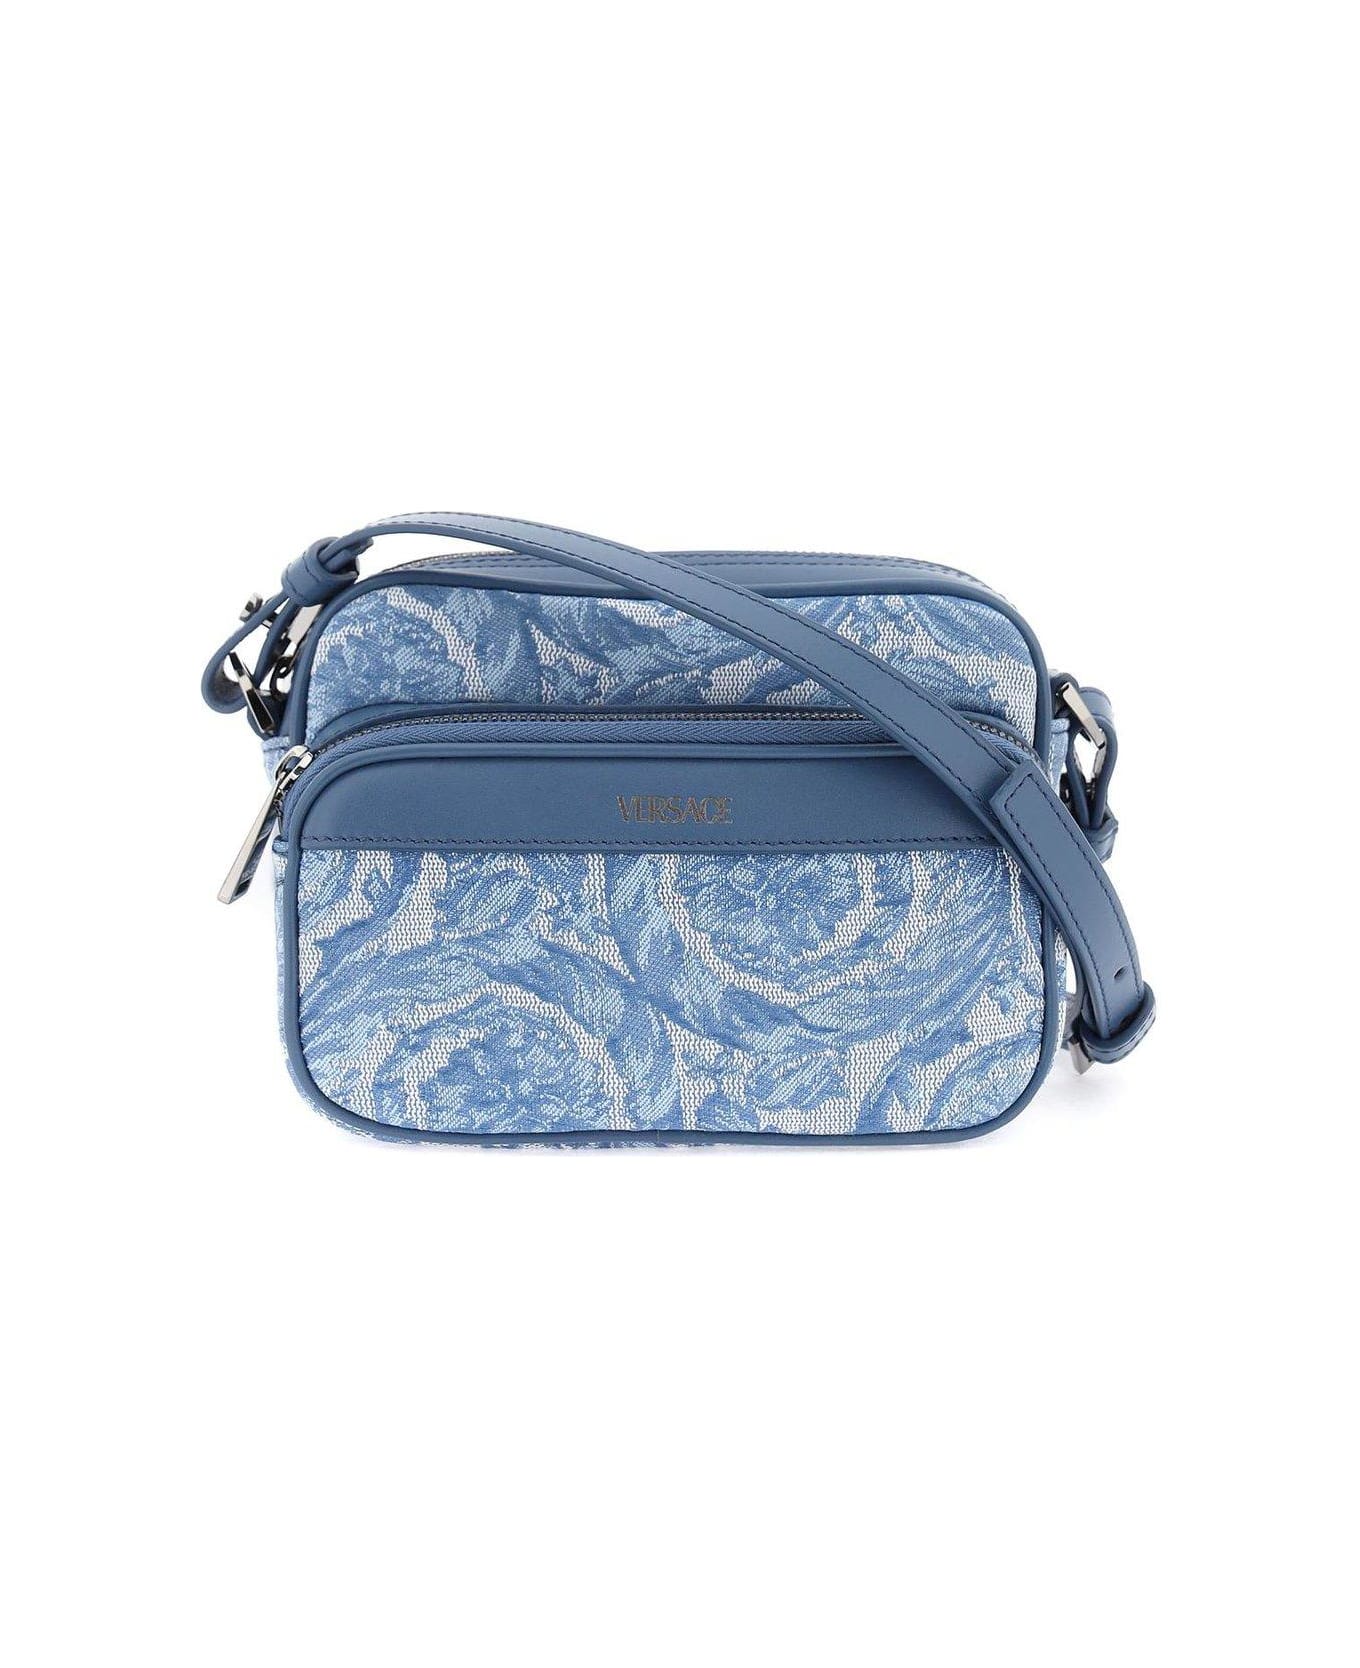 Versace Barocco Athena Zip-up Messenger Bag - BABY BLUE GENTIAN BLUE RU (Light blue)